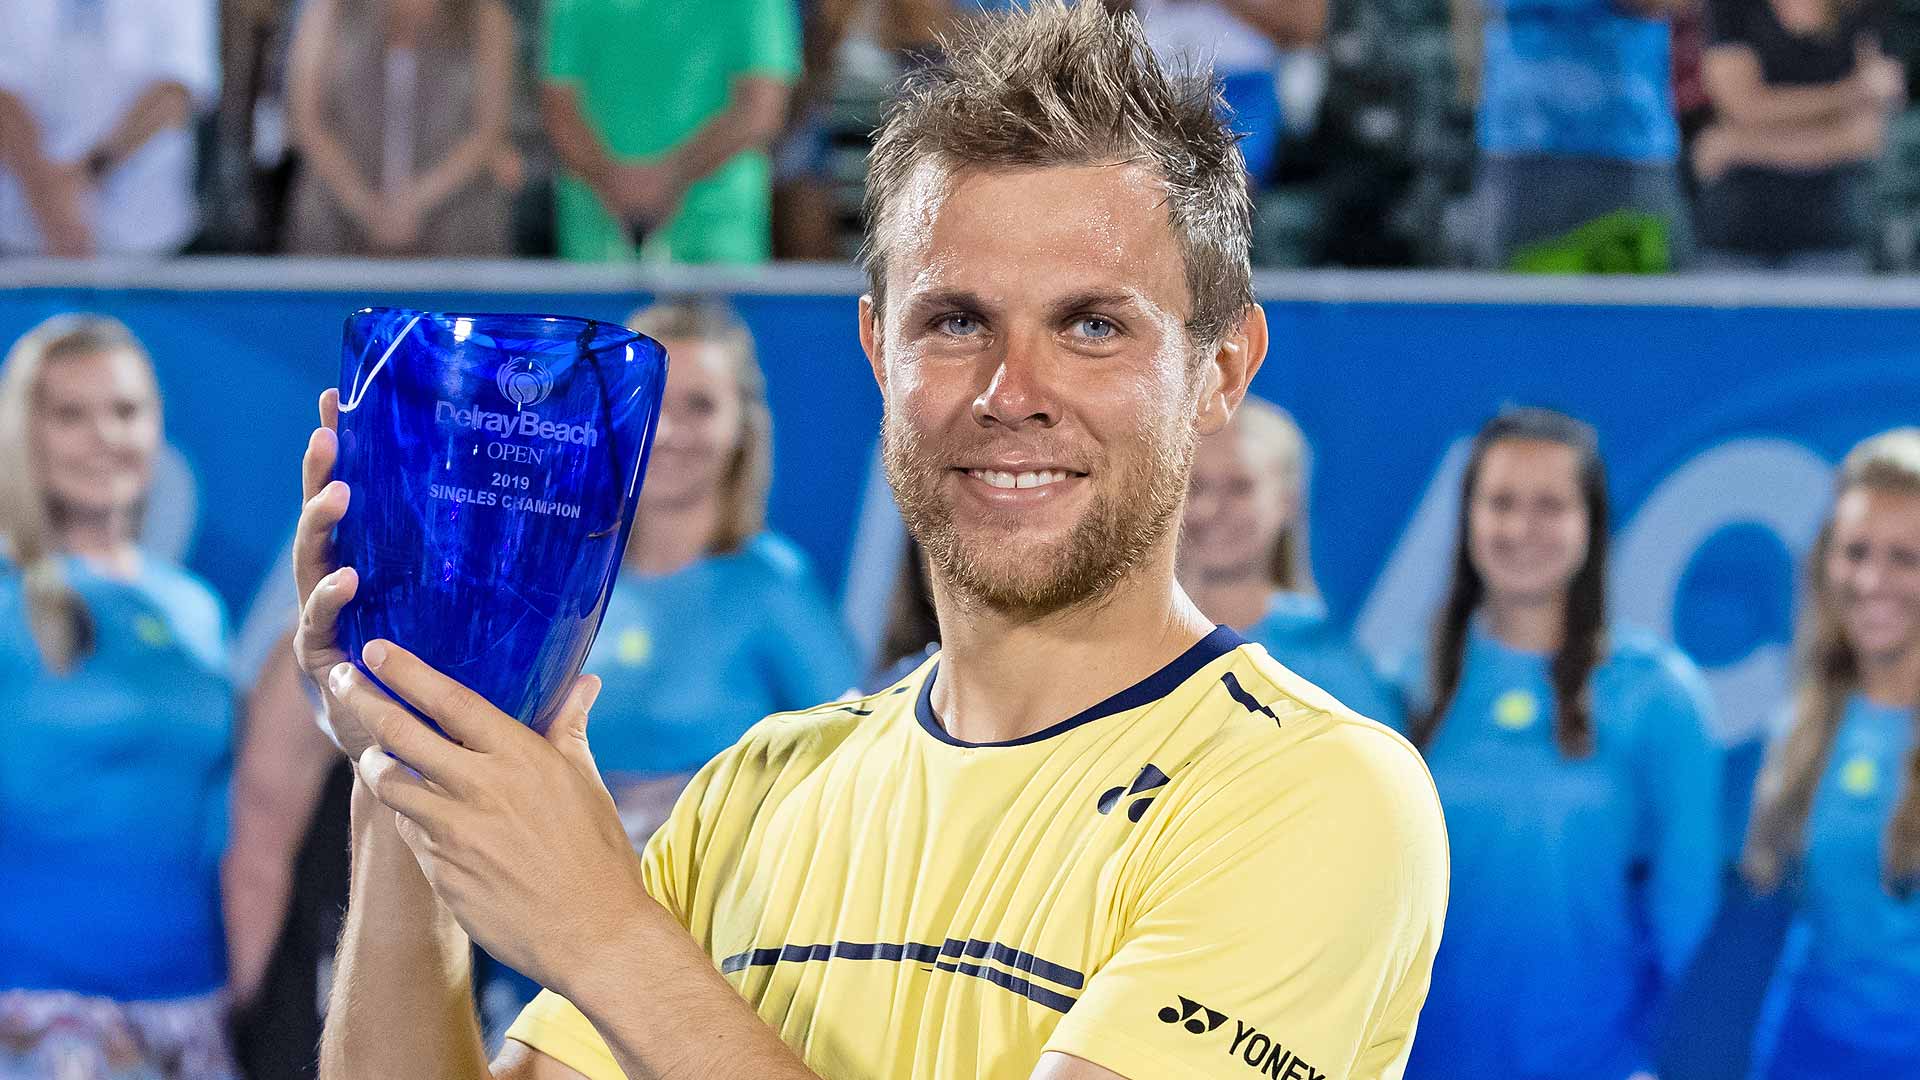 Radu Albot lifts his first ATP Tour trophy.